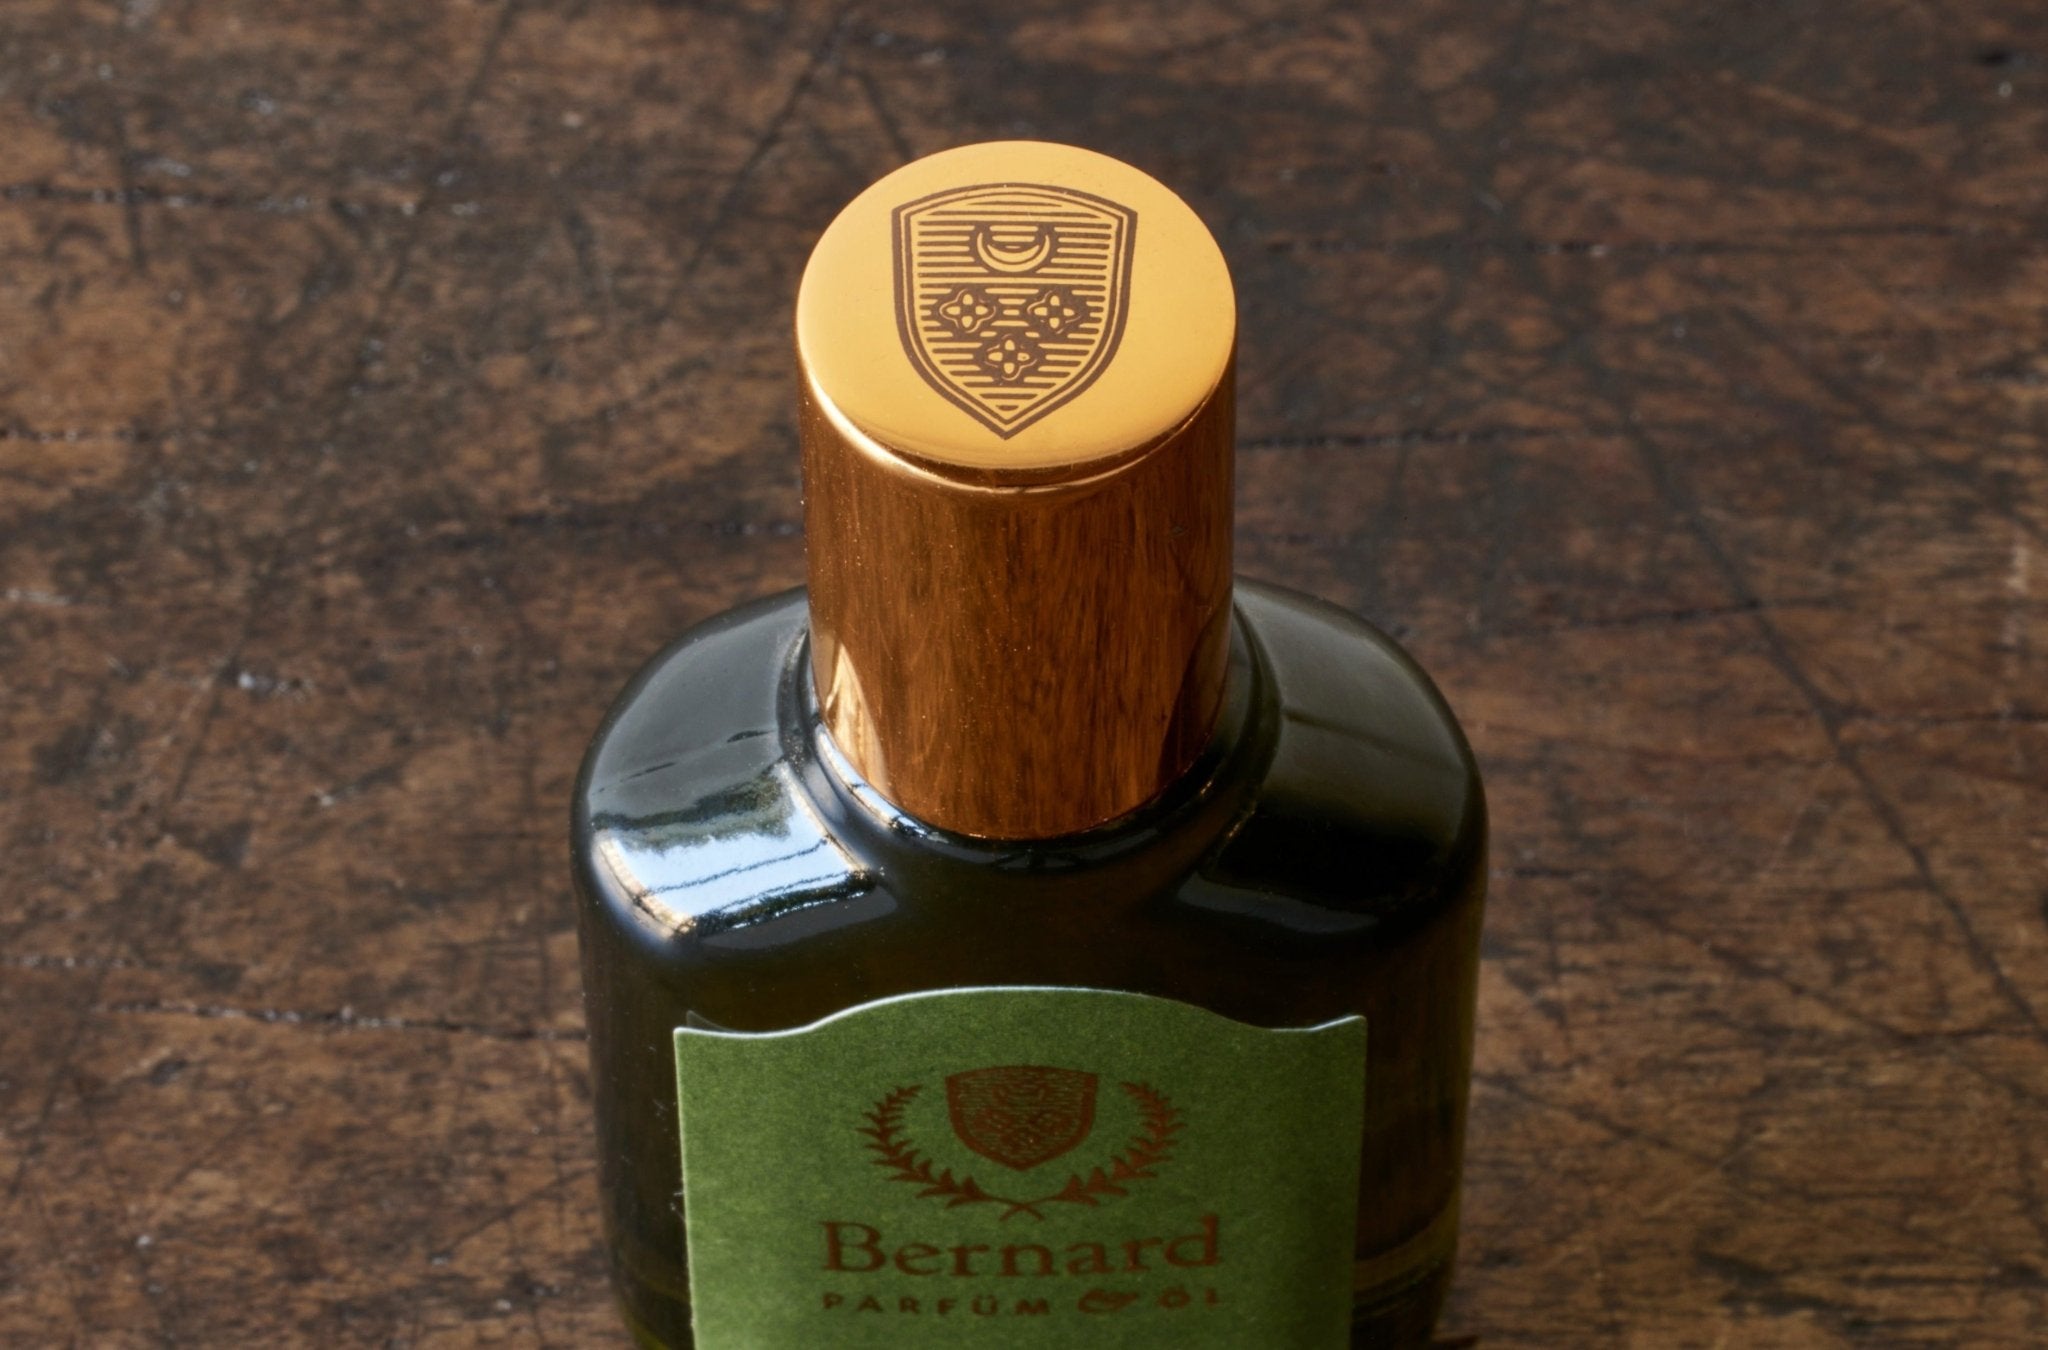 Bernard, Eira Parfüm Öl Bijou - Nickey Kehoe